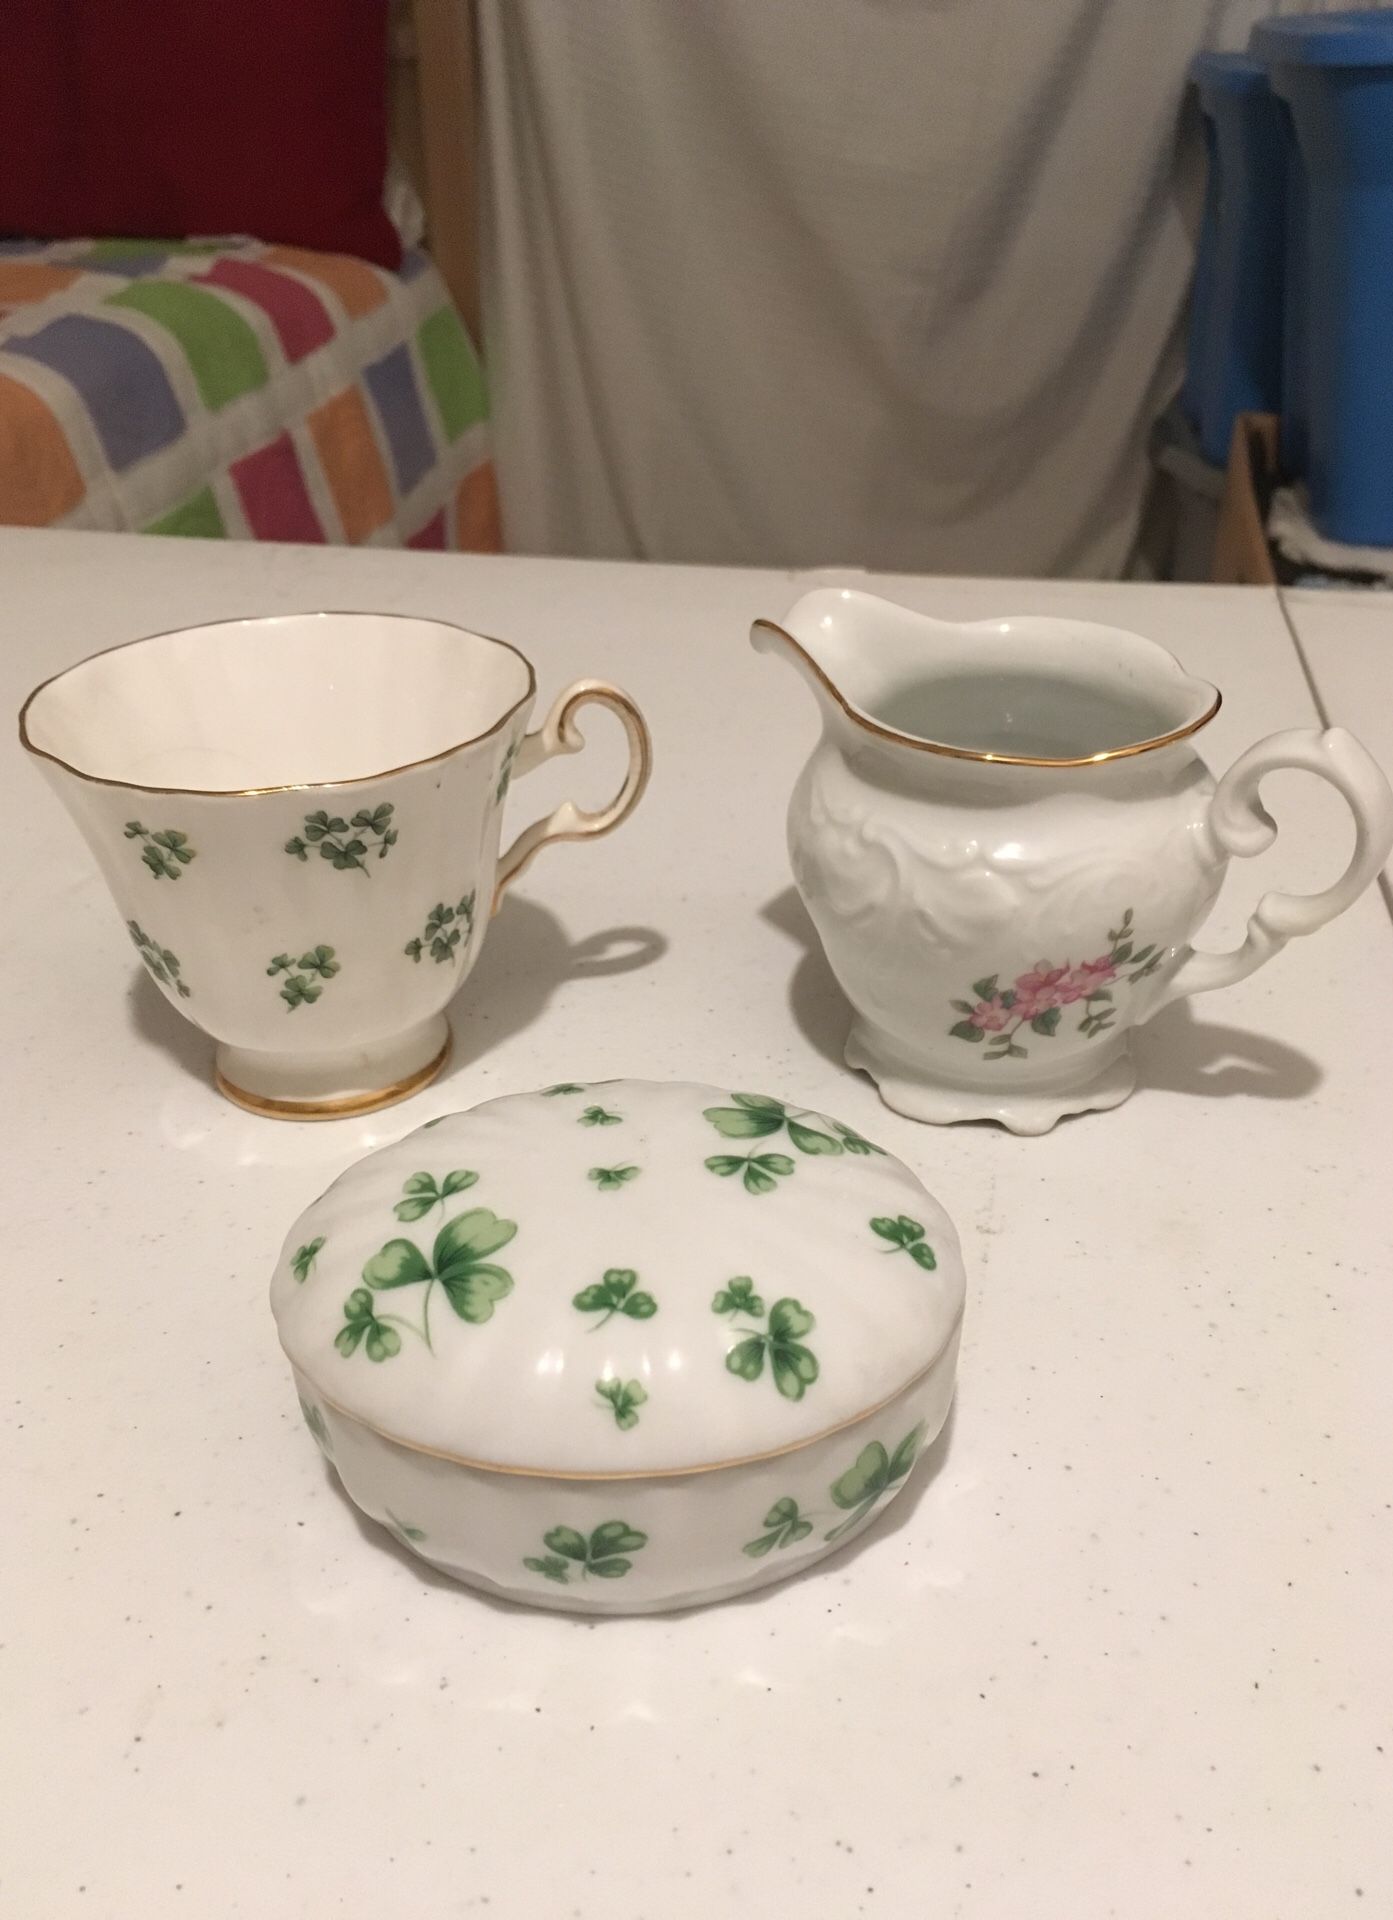 Antique Tea Cup, Creamer, & Jewelry Box Shamrocks Flowers 1772, 1950, 2001 Royal Grafton Fine Bone China